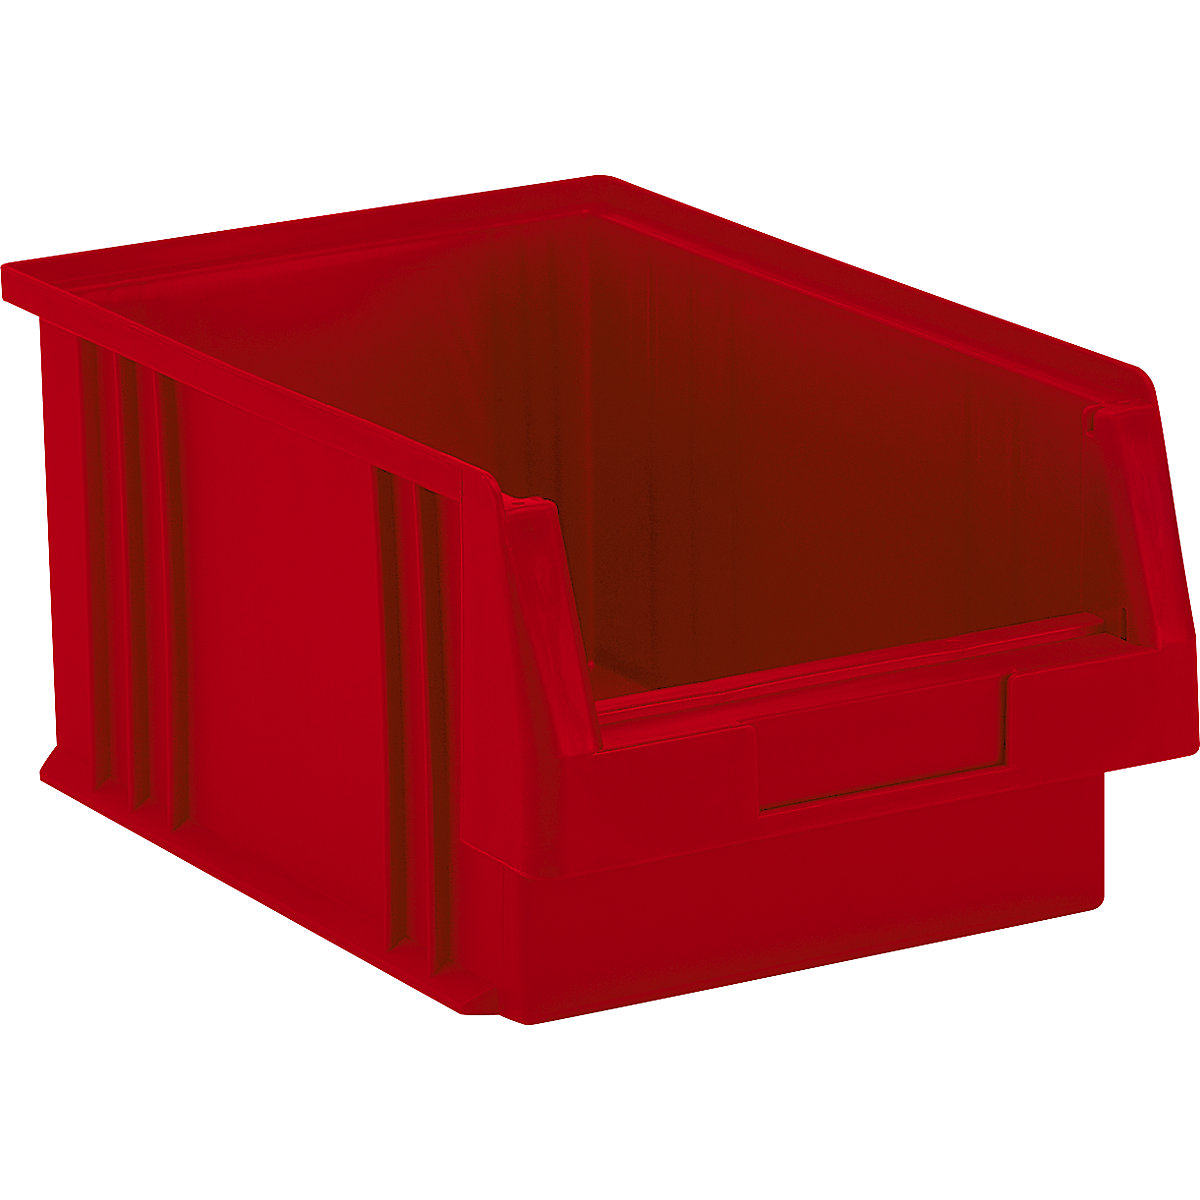 Open fronted storage bin made of polypropylene